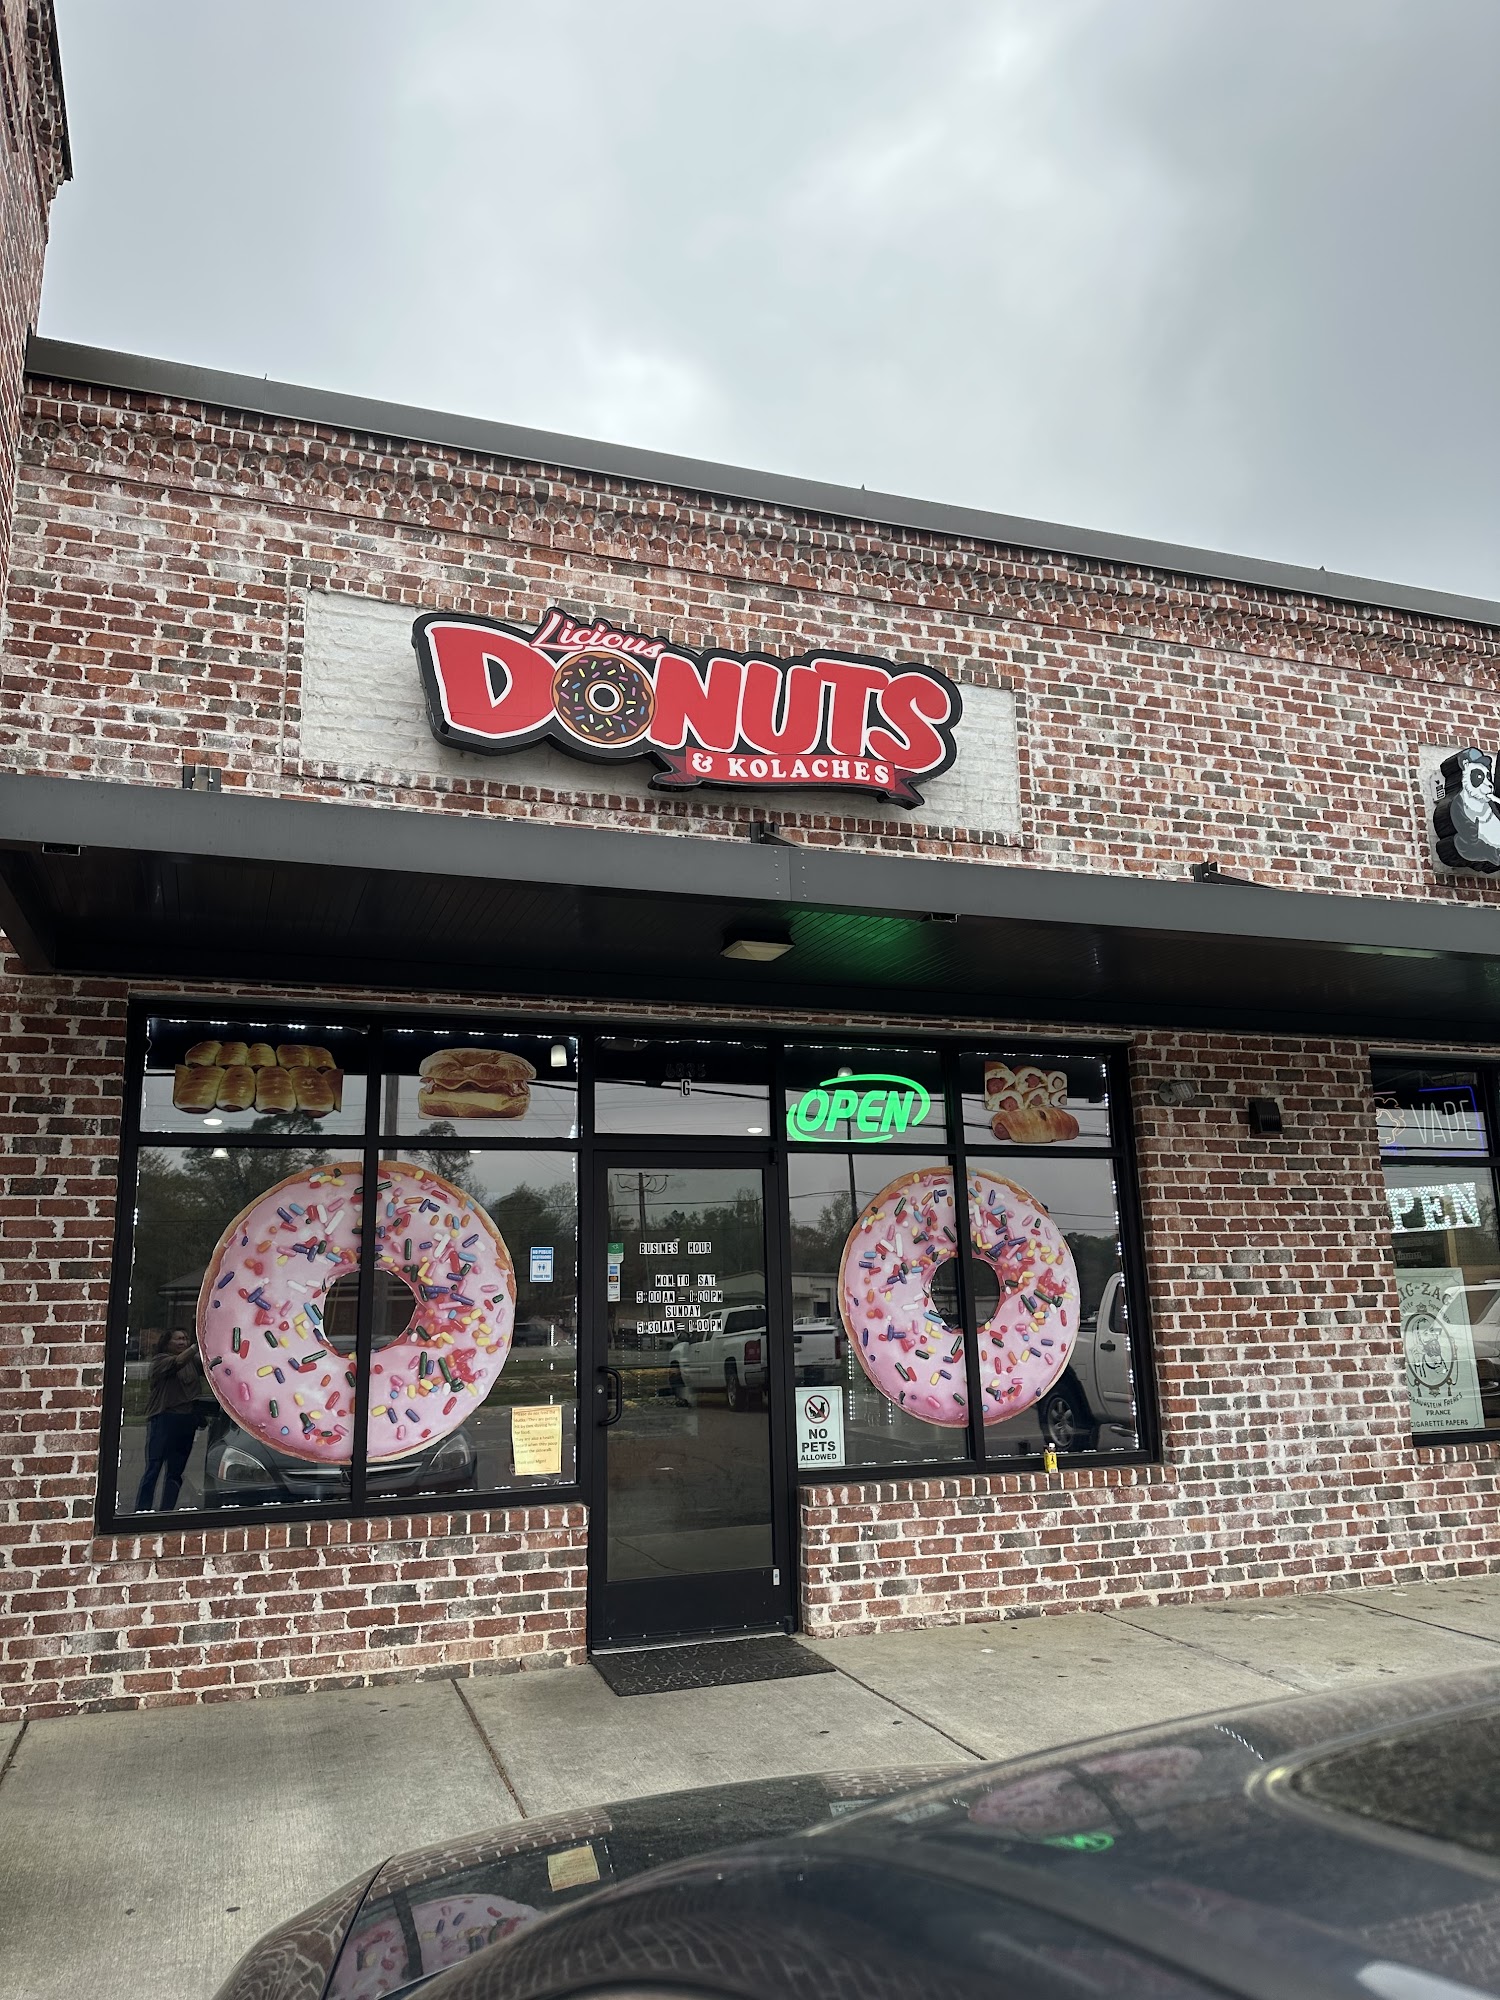 Licious Donuts and Kolaches